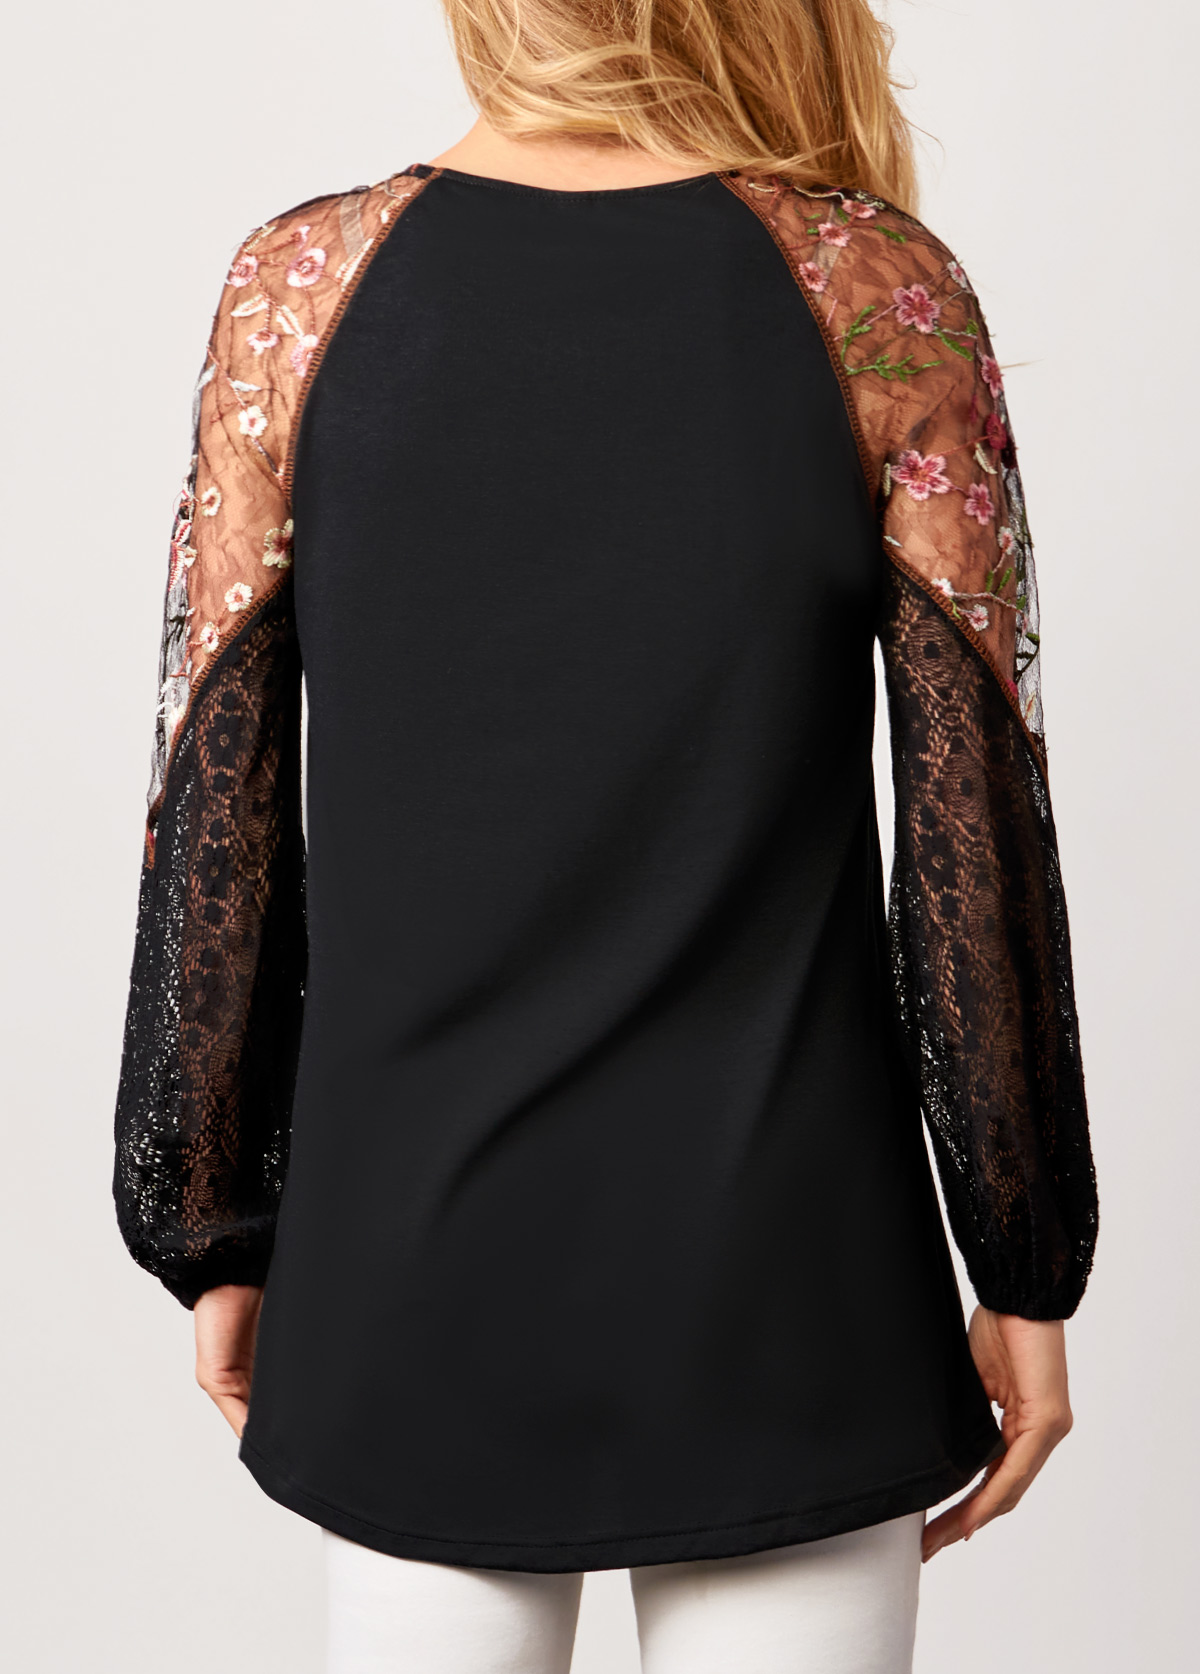 Lace Stitching Long Sleeve Black Blouse